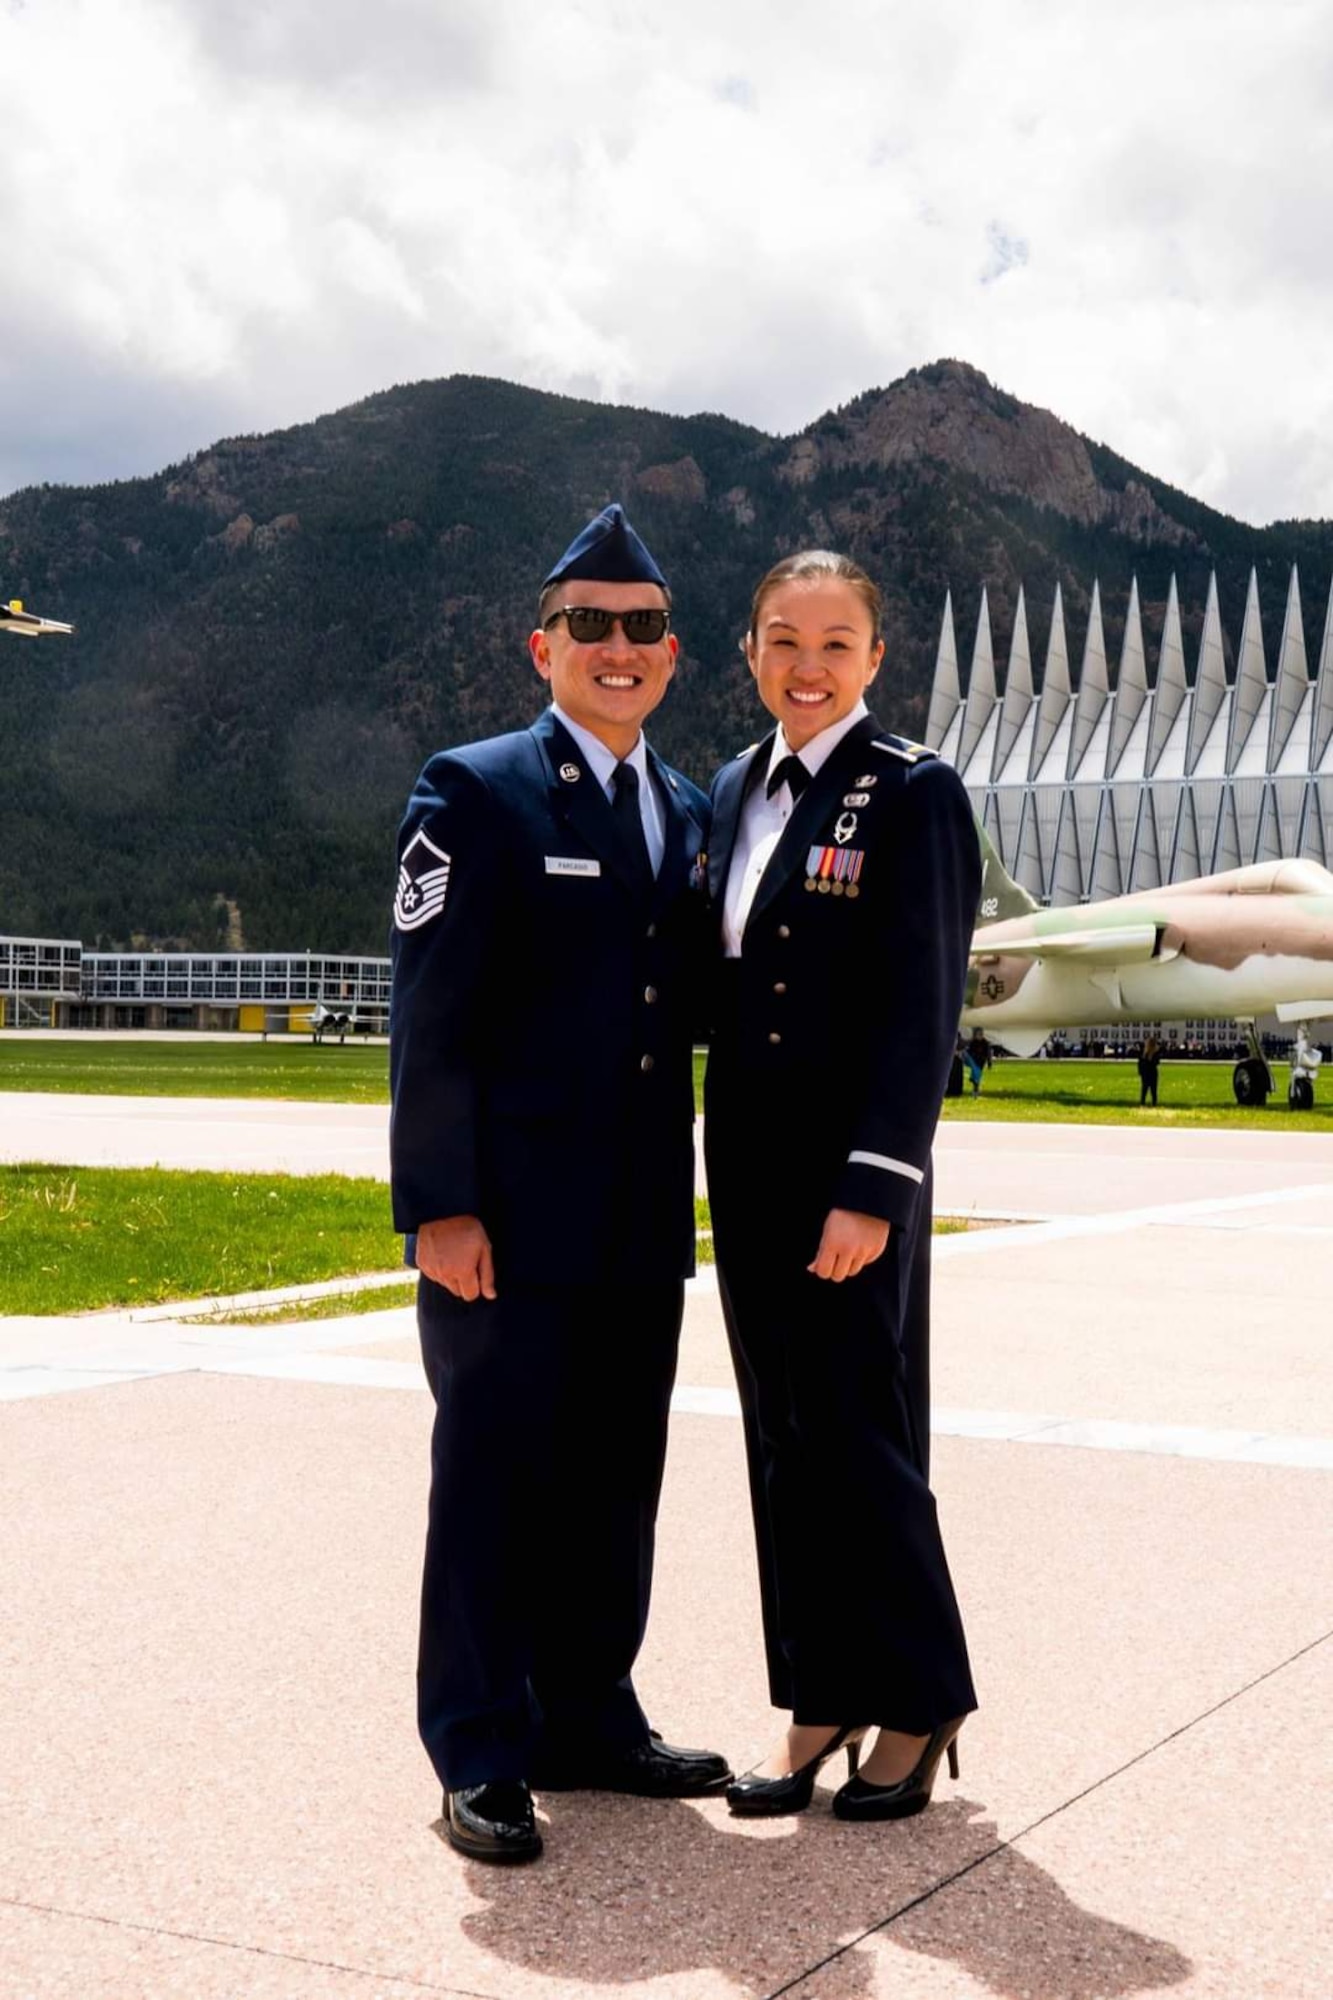 U.S. Air Force Capt. Heather Parcasio and Senior Master Sgt. Chris Parcasio at the U.S. Air Force Academy, Colorado Springs, Colorado, in 2017. (U.S. Air Force courtesy photo)